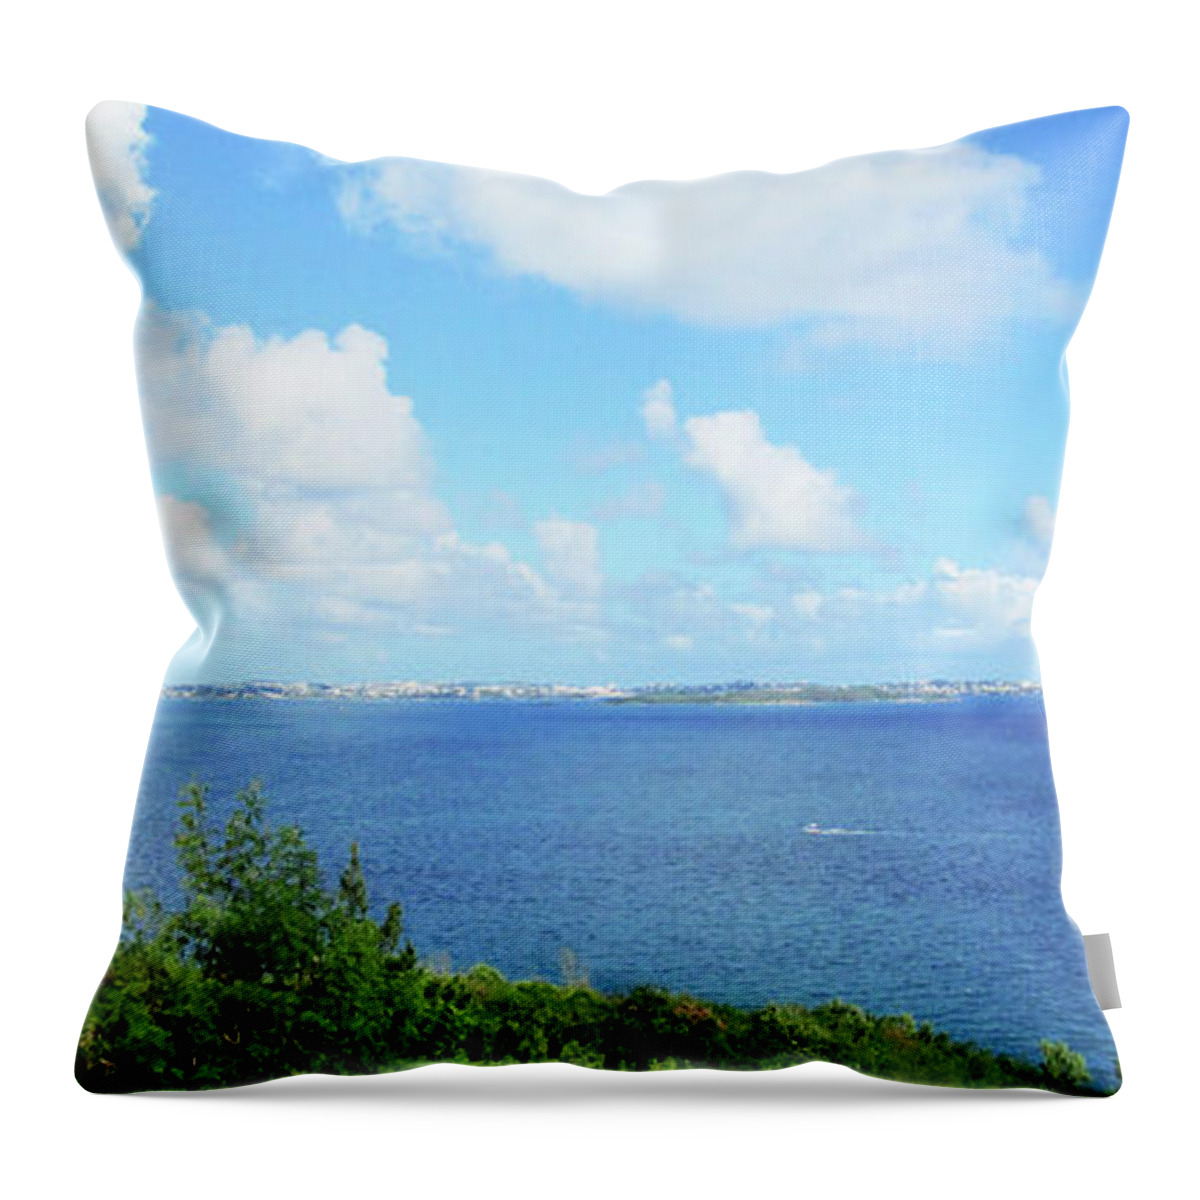 Bermuda Throw Pillow featuring the photograph From Scaur Hill Bermuda by Ian MacDonald